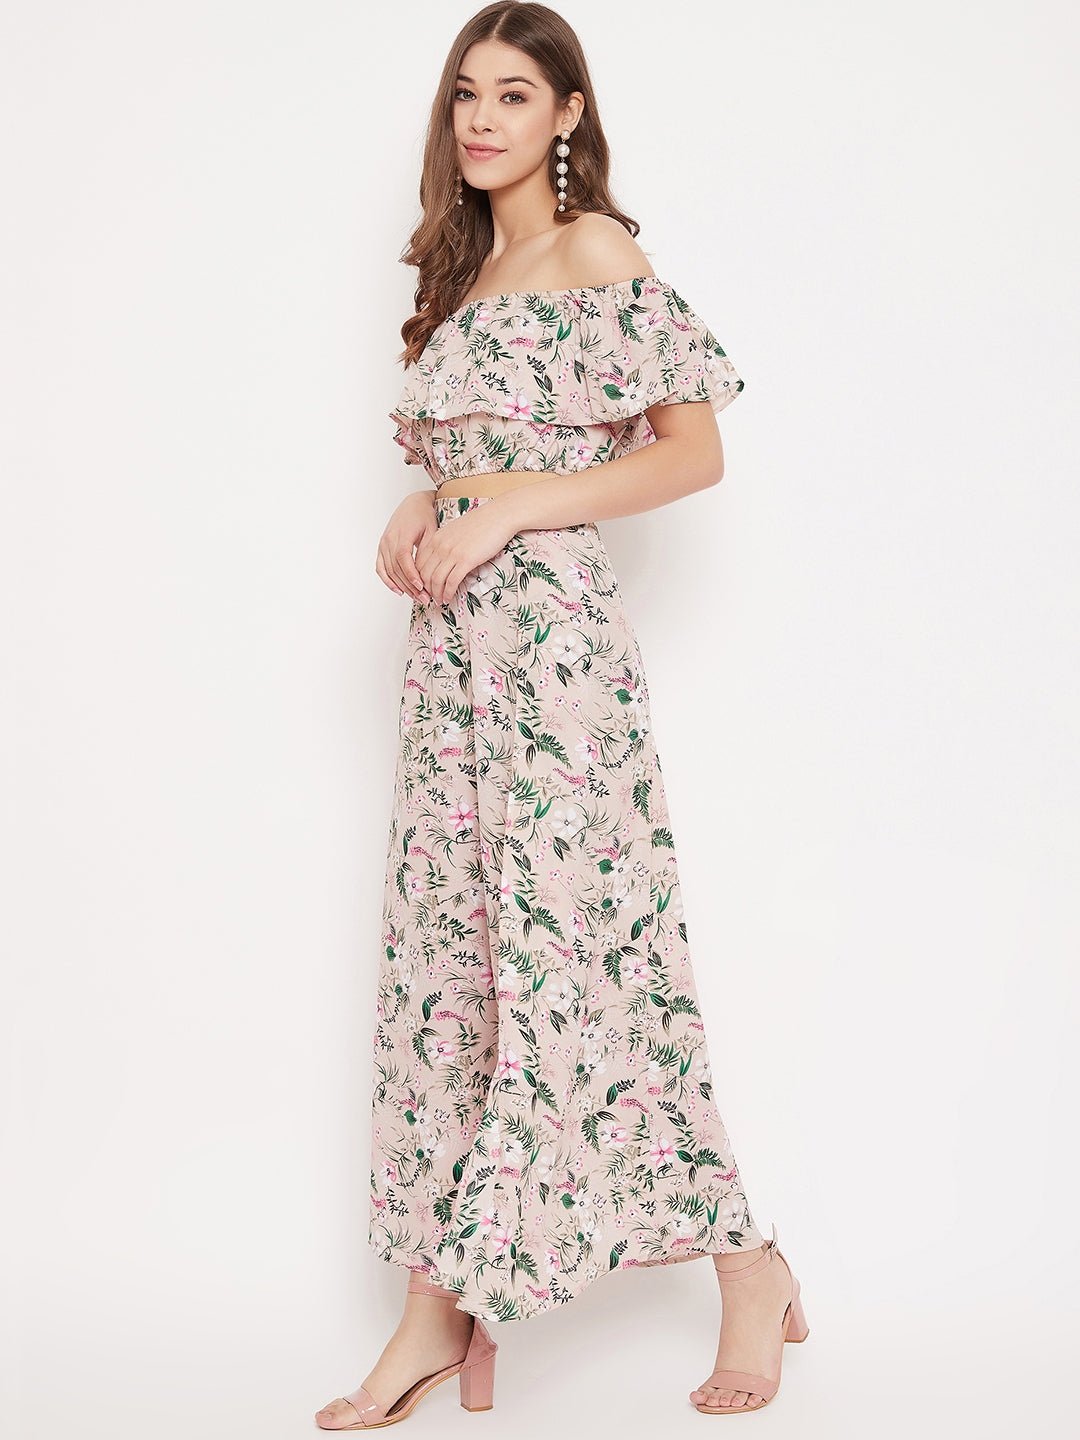 Folk Republic Beige Floral Print Co-Ord Dress Set - #folk republic#